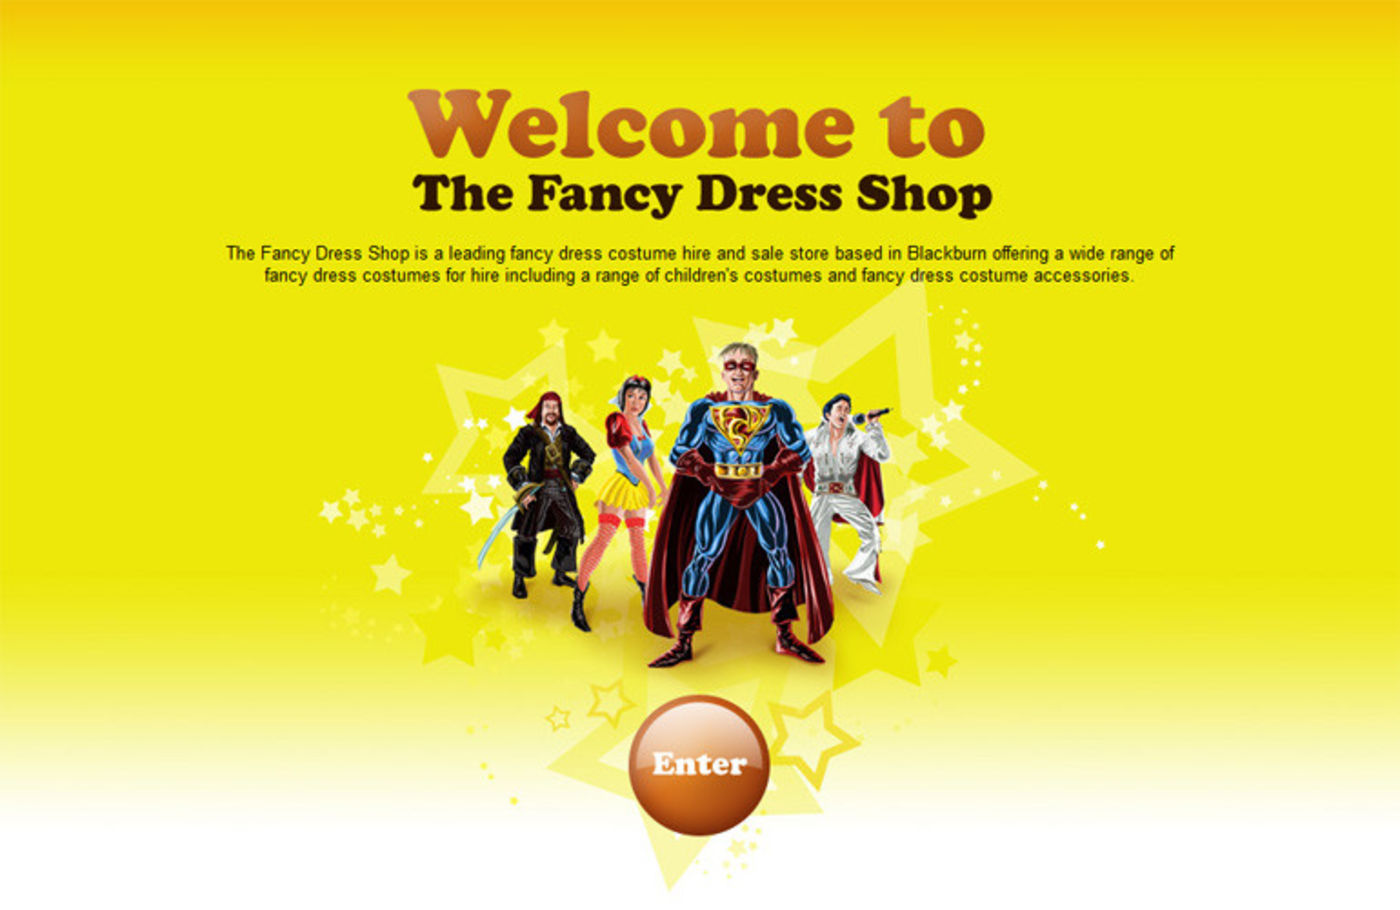 The Fancy Dress Shop Welcome